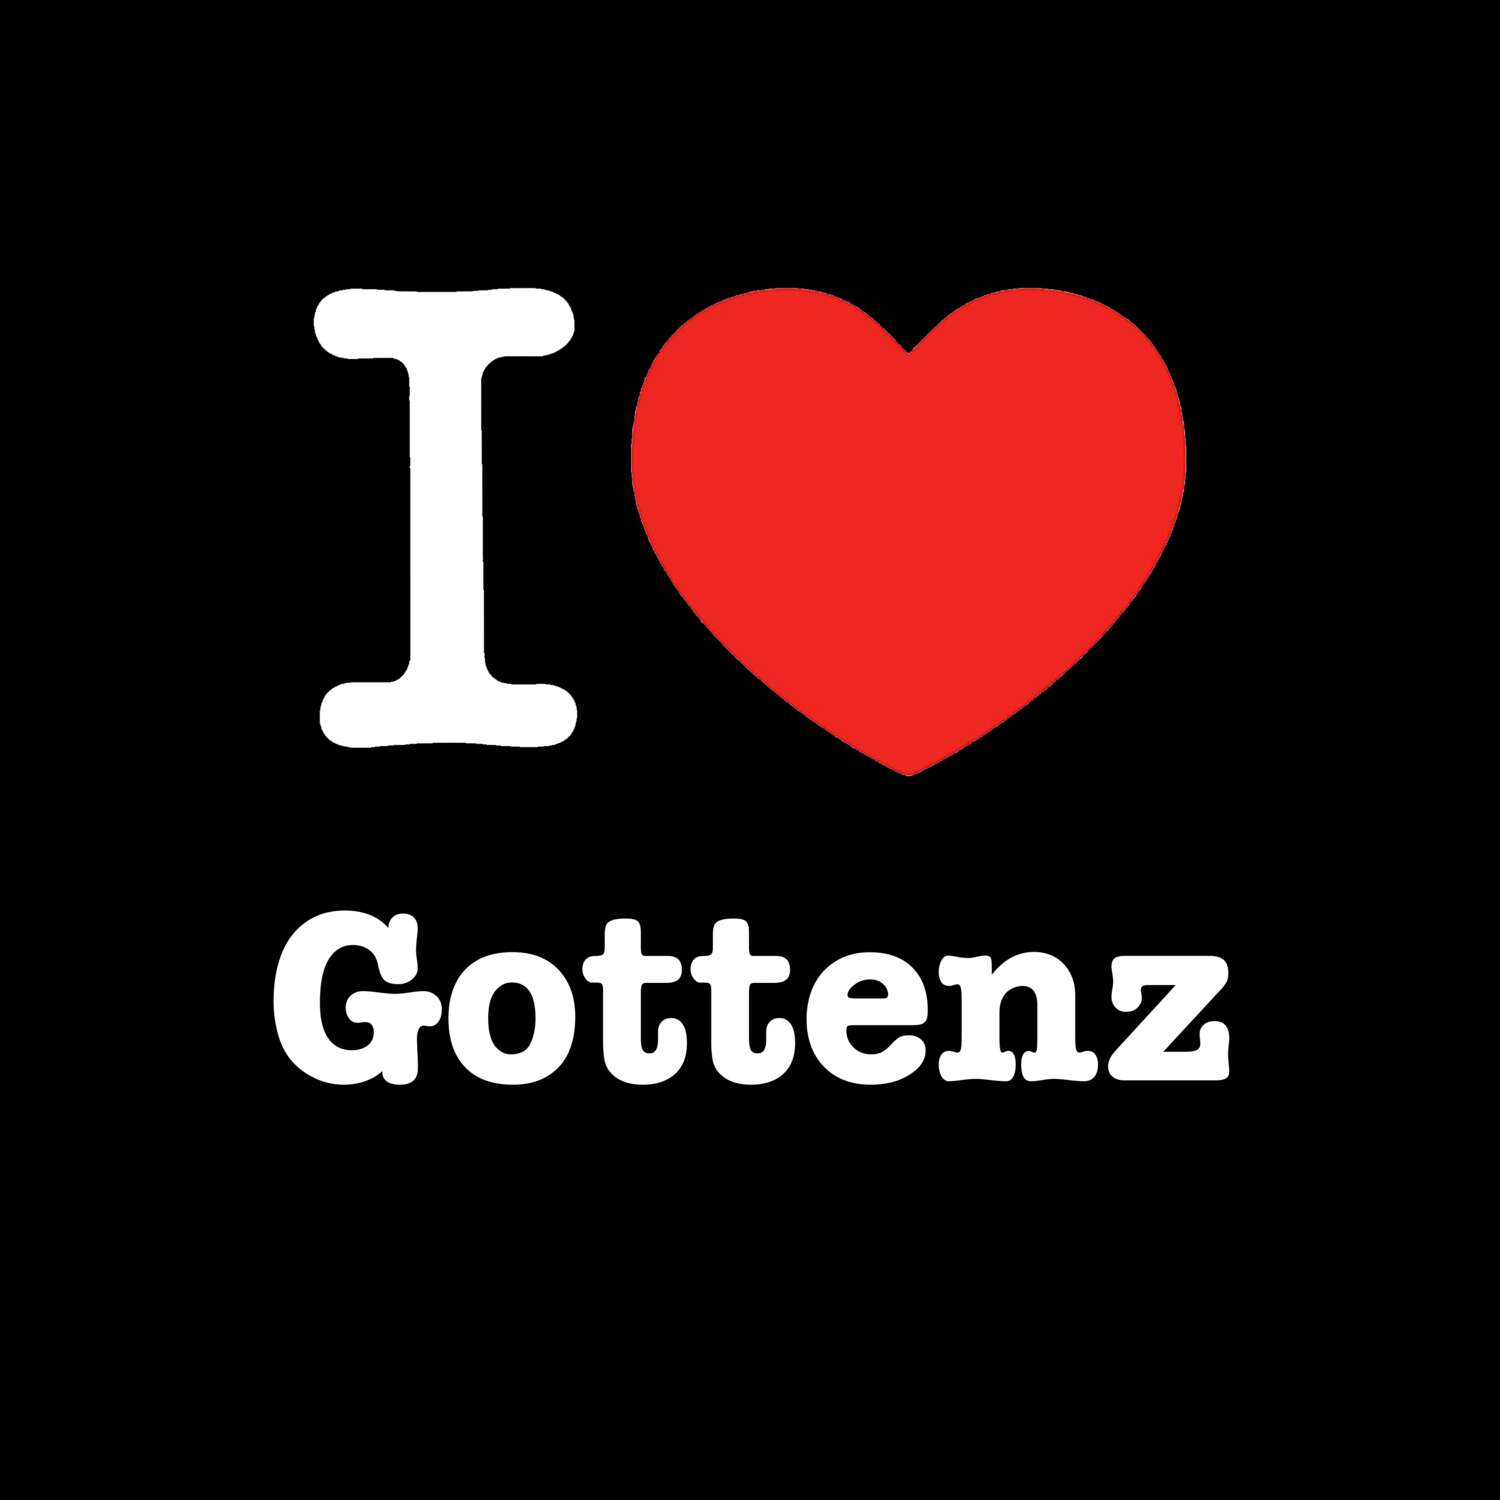 Gottenz T-Shirt »I love«